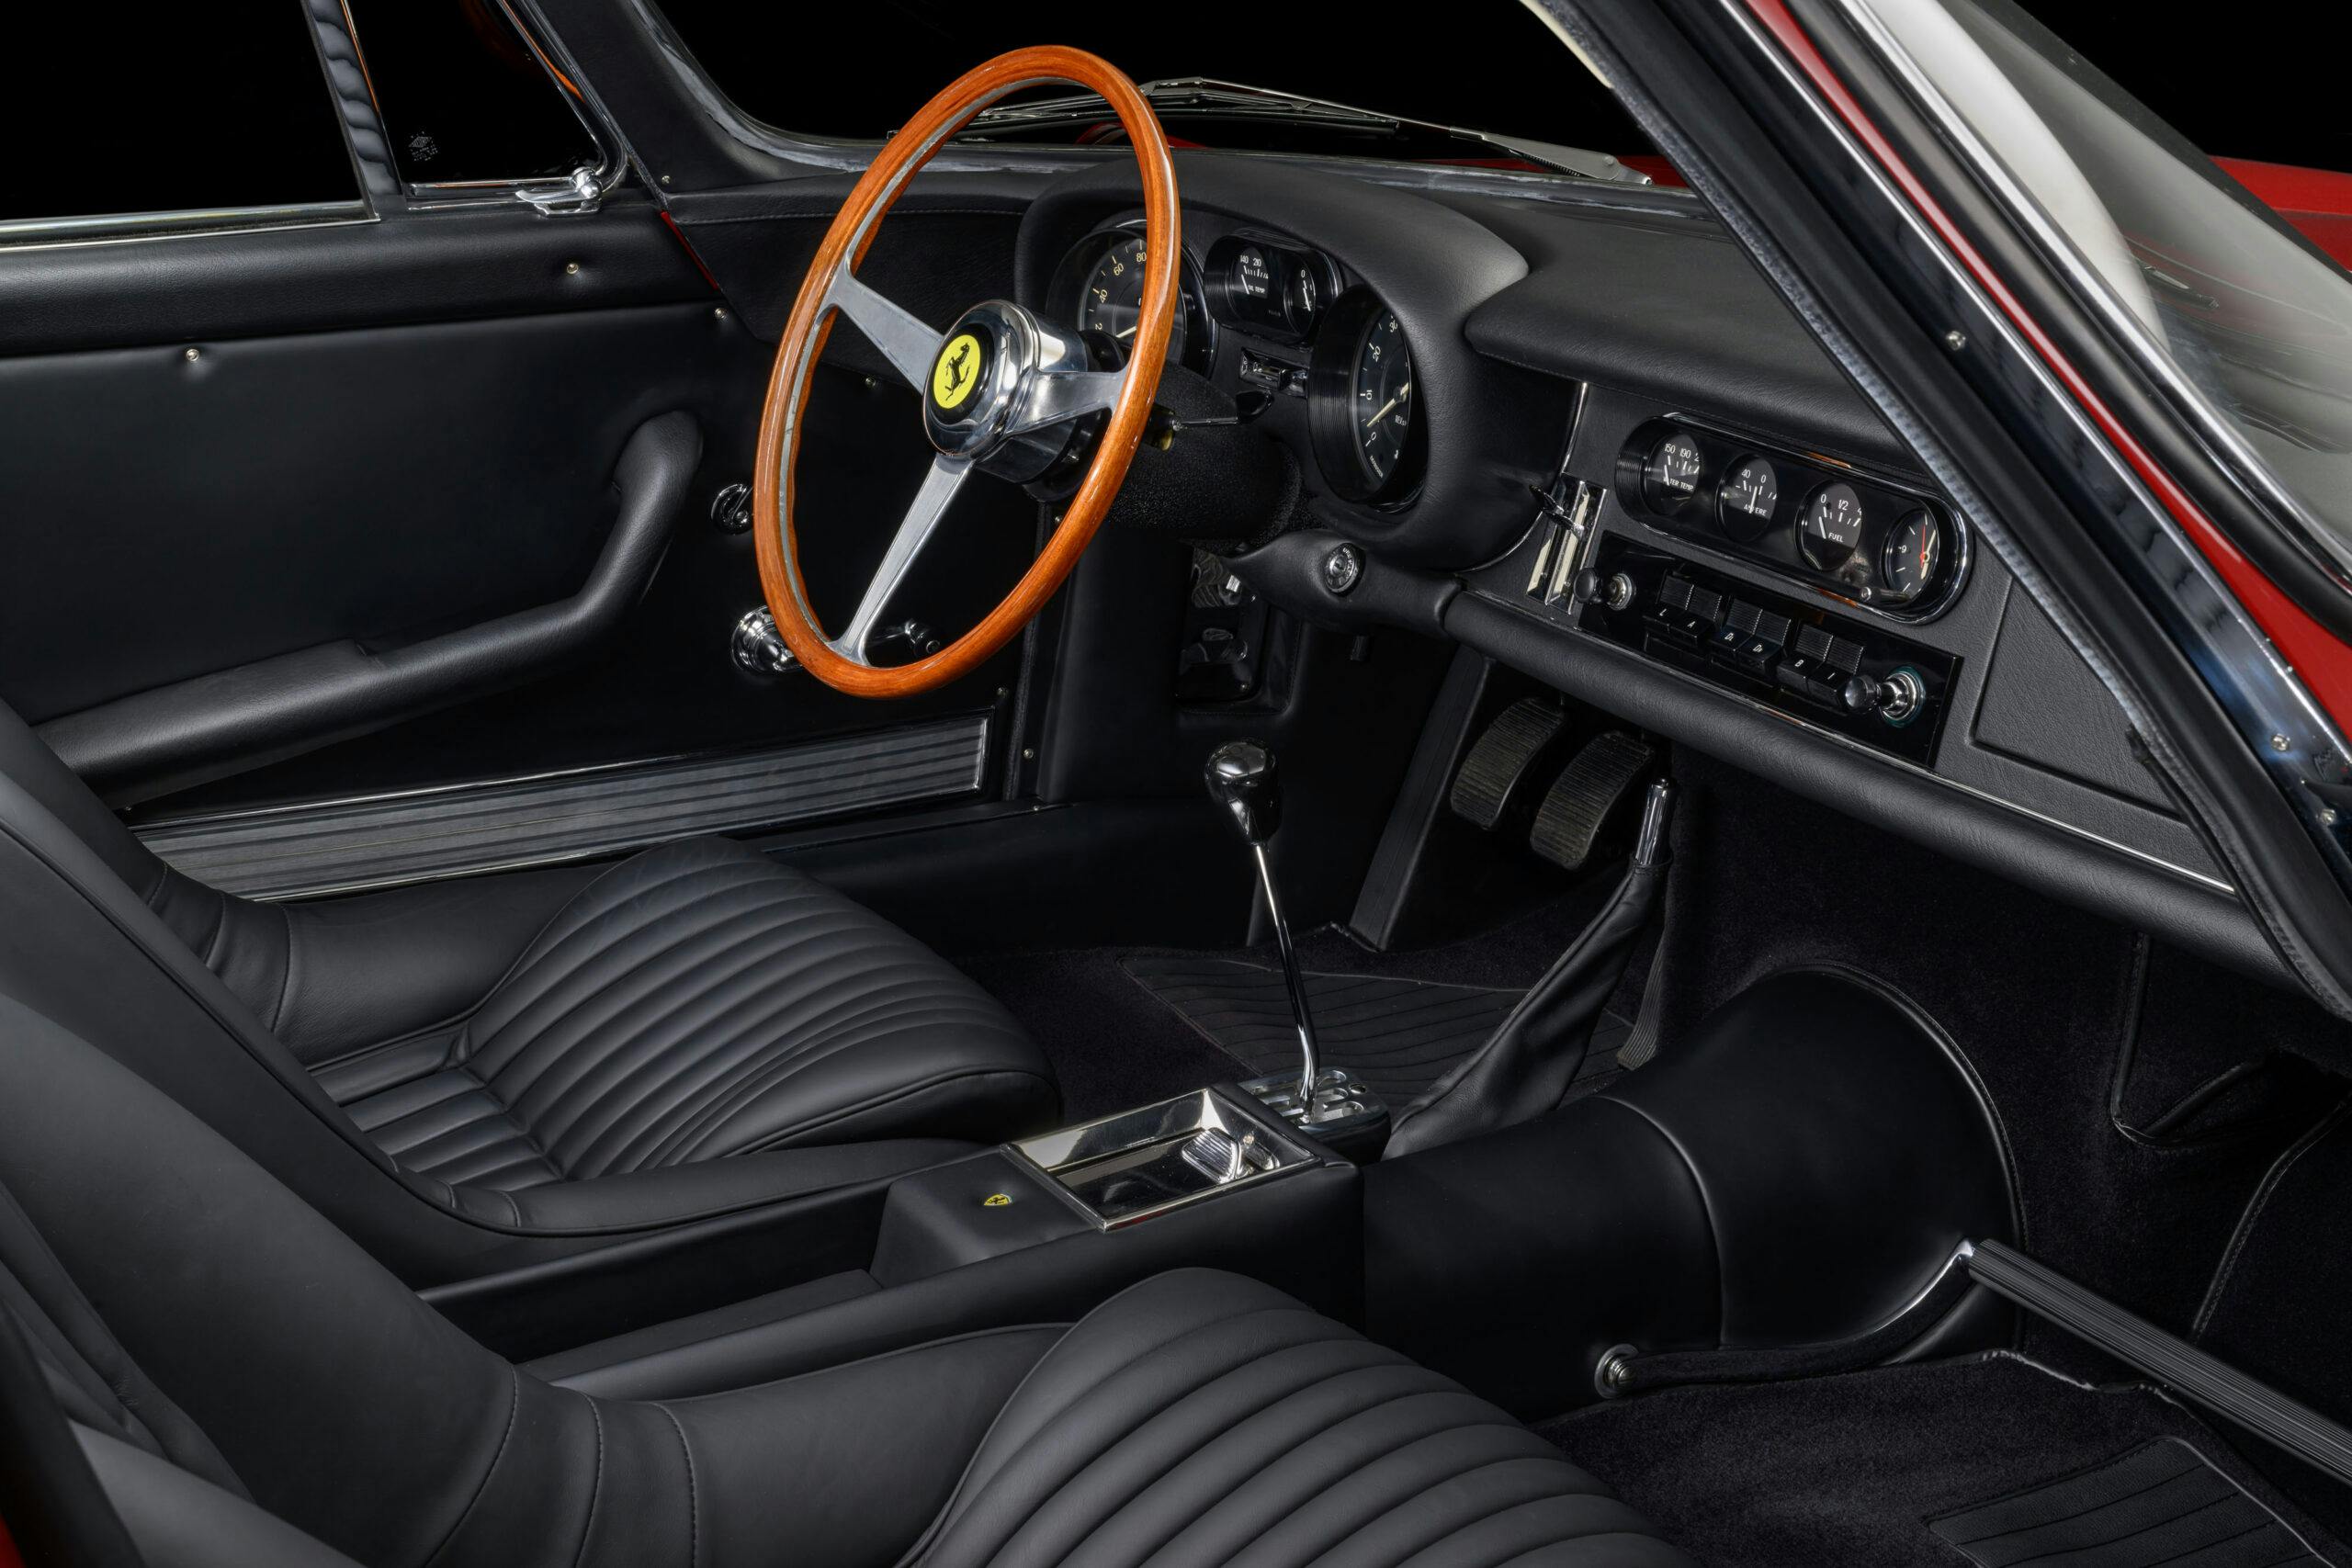 1967 Ferrari 275 GTB/4 interior